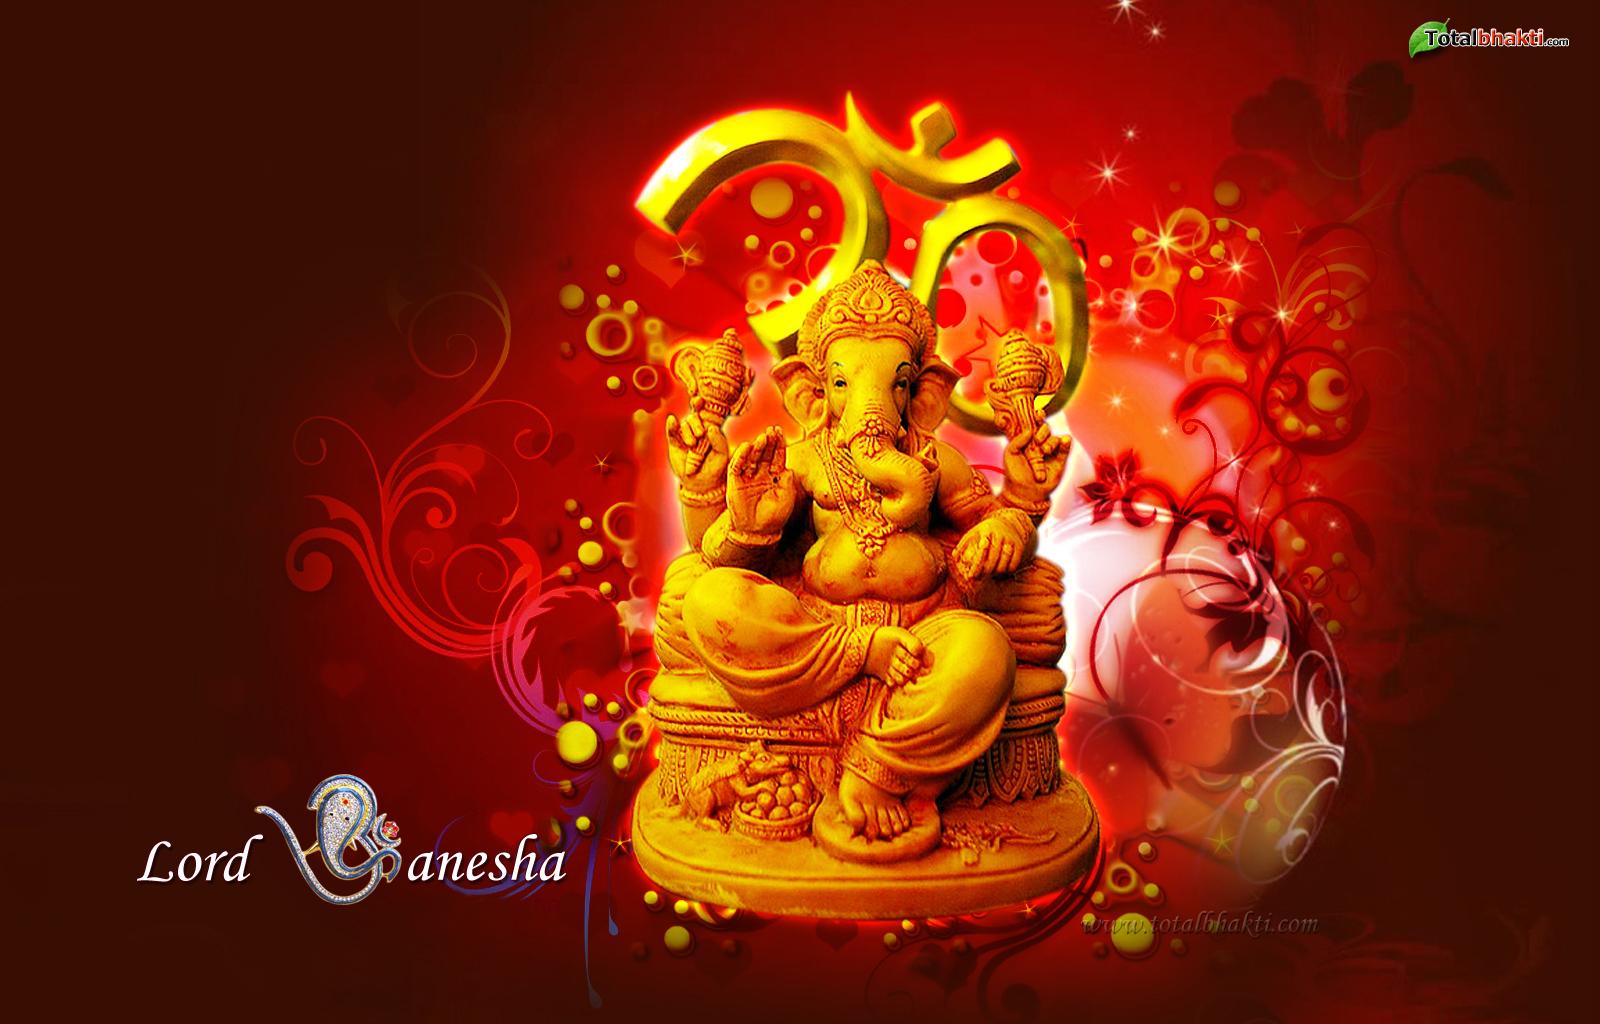 Lord Ganesha HD Wallpaper Image HD Lord Ganesha HD